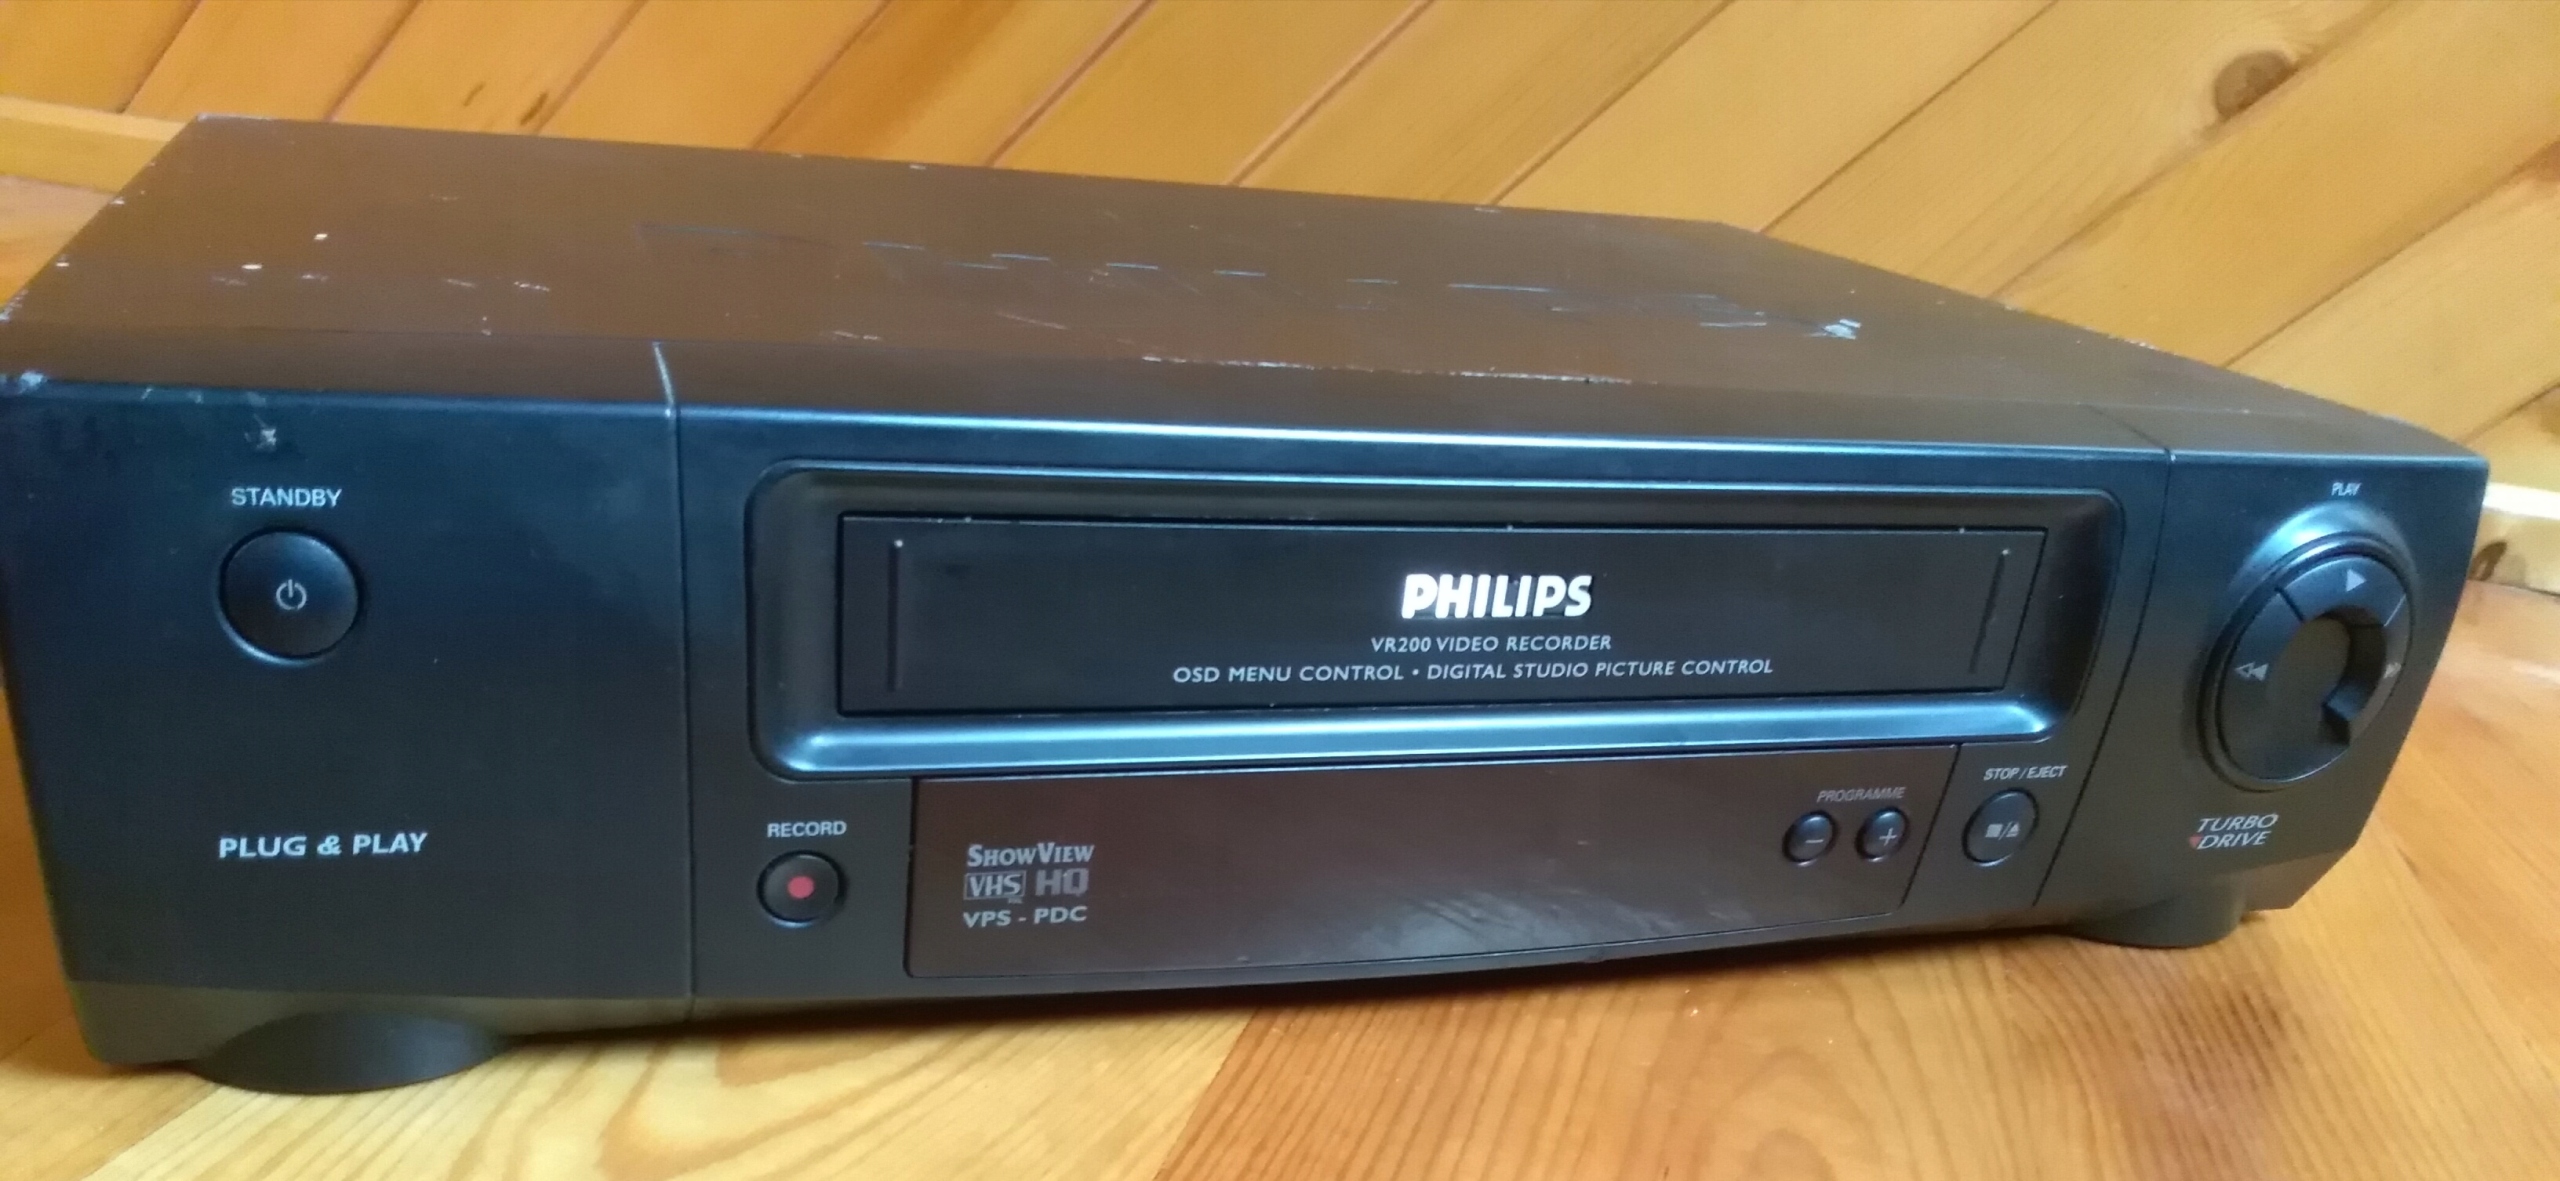 Philips vr. Видеомагнитофон Philips vr254. Видеомагнитофон Philips vr34702. Philips vr755. Видеомагнитофон Philips VR.